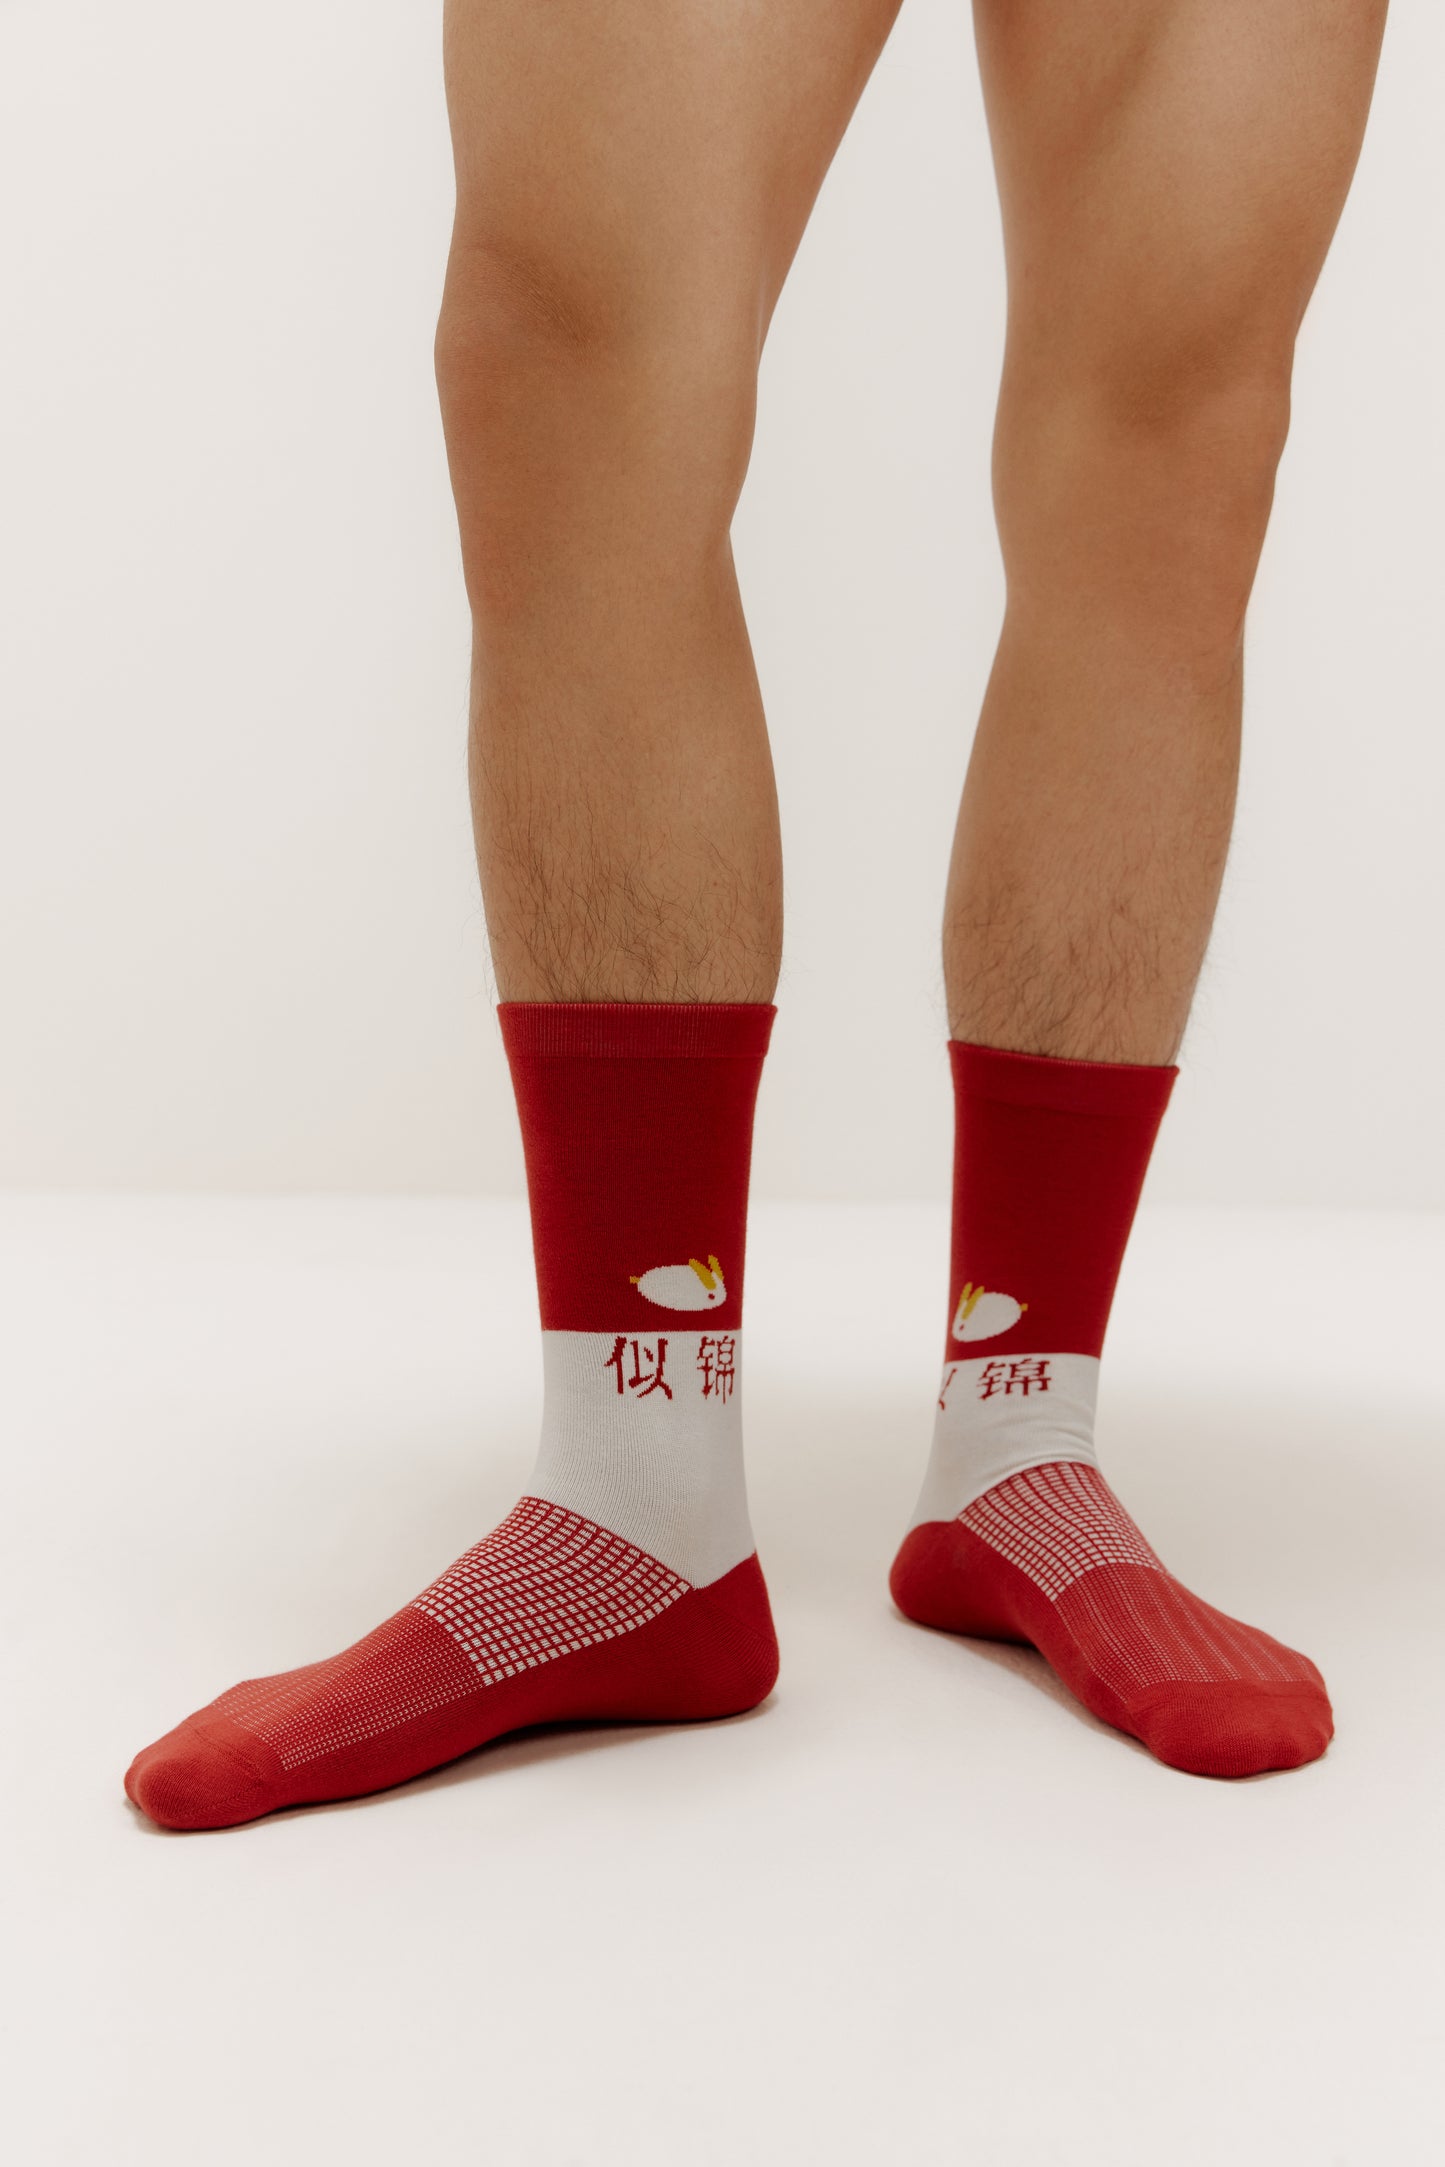 man's feet wearing a pair of socks